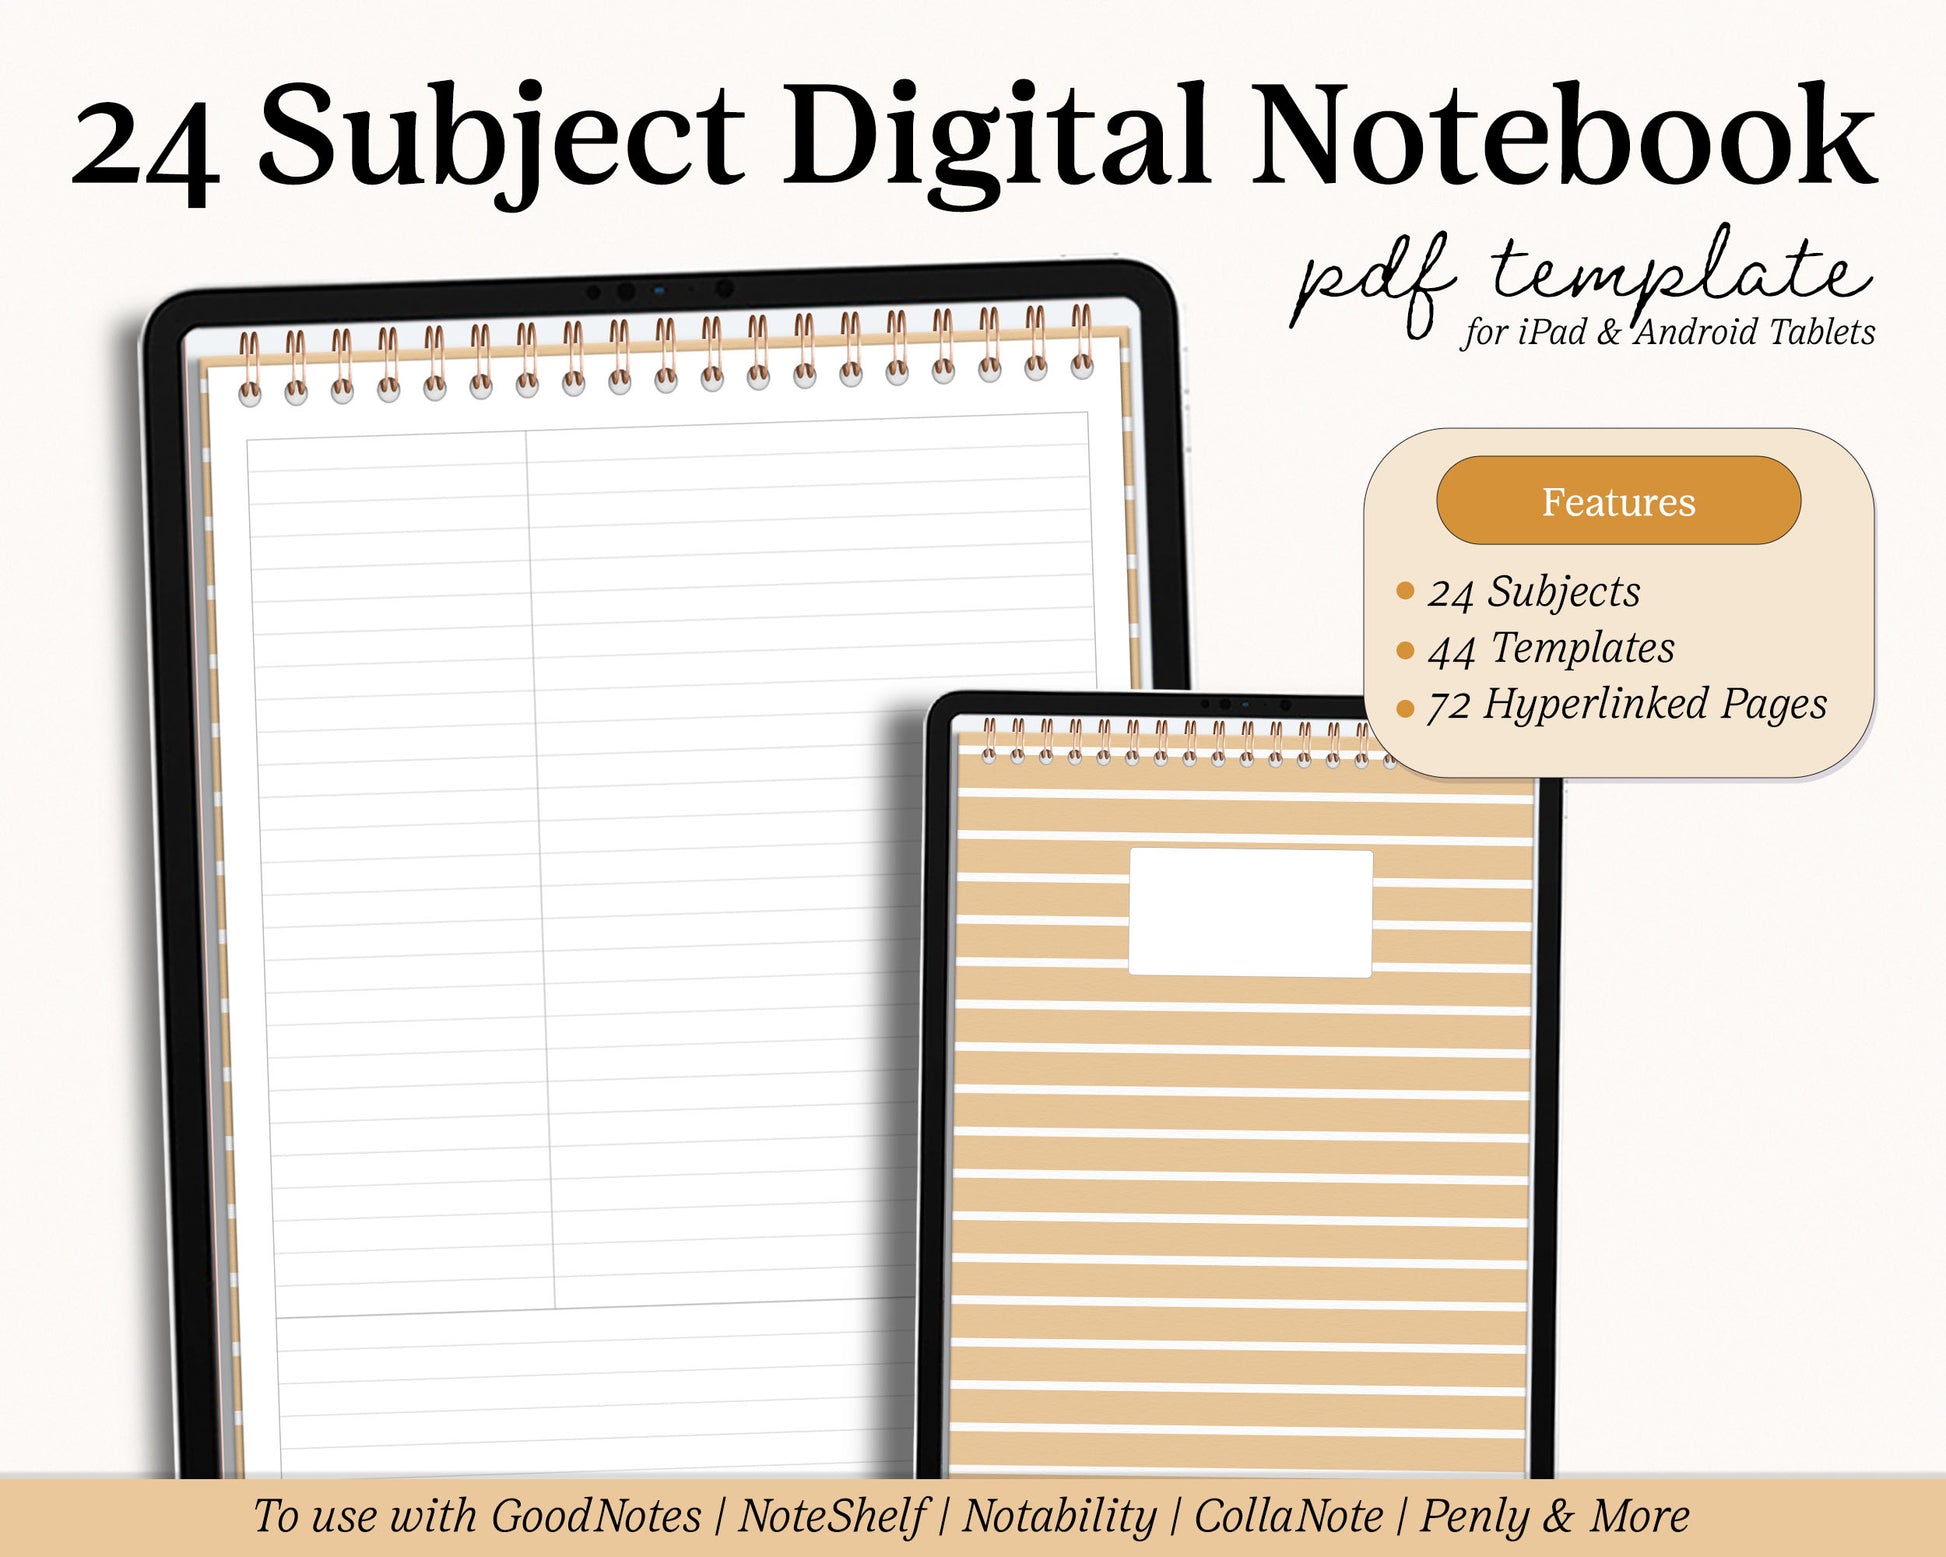 Digital Notebook Landscape Blank Sticker Book Goodnotes